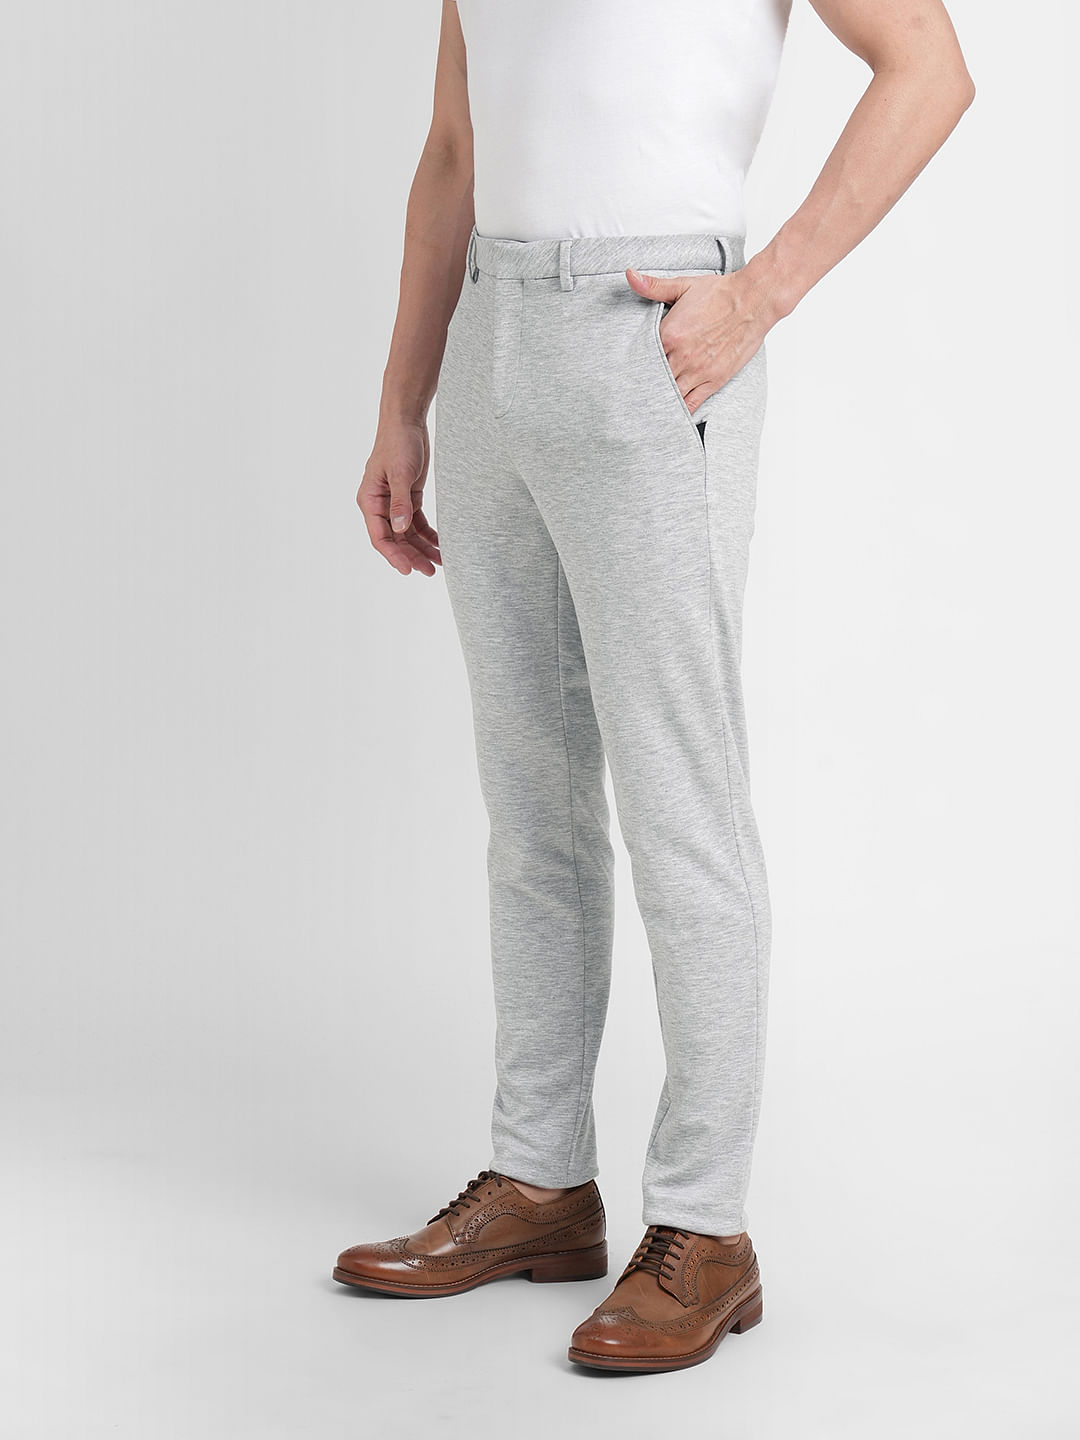 Buy Black CP Slim Fit Casual Trousers for Men Online at Killer  471589